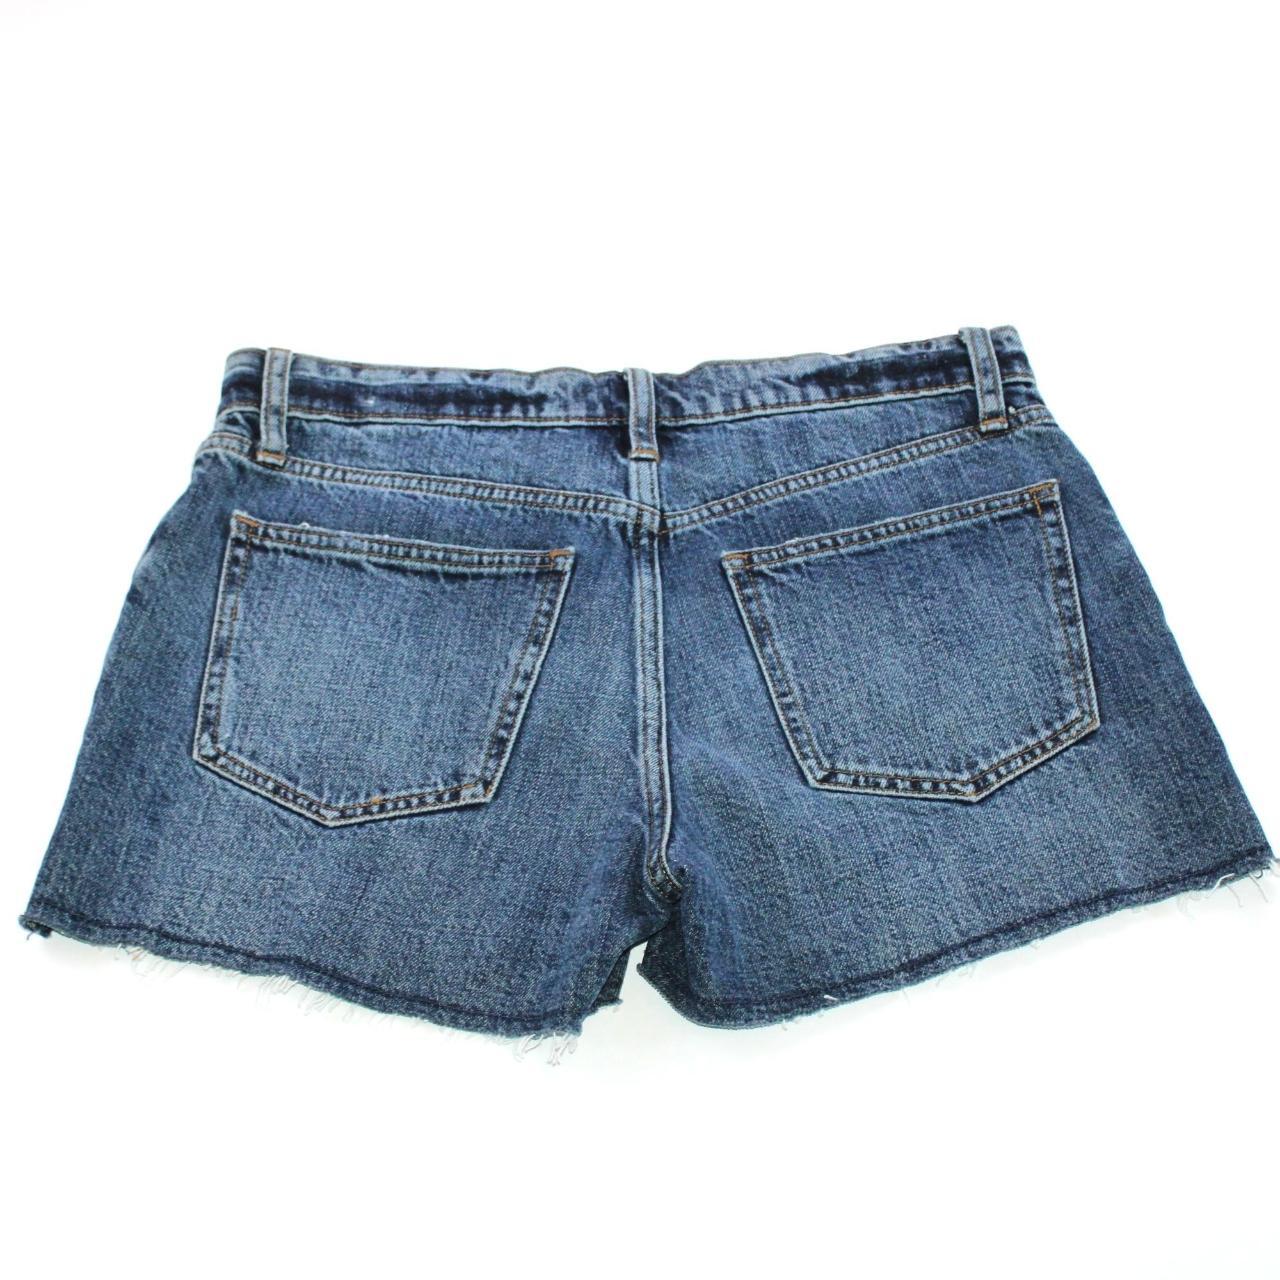 Gap 1969 Jeans Shorts Frayed Hem Size Depop